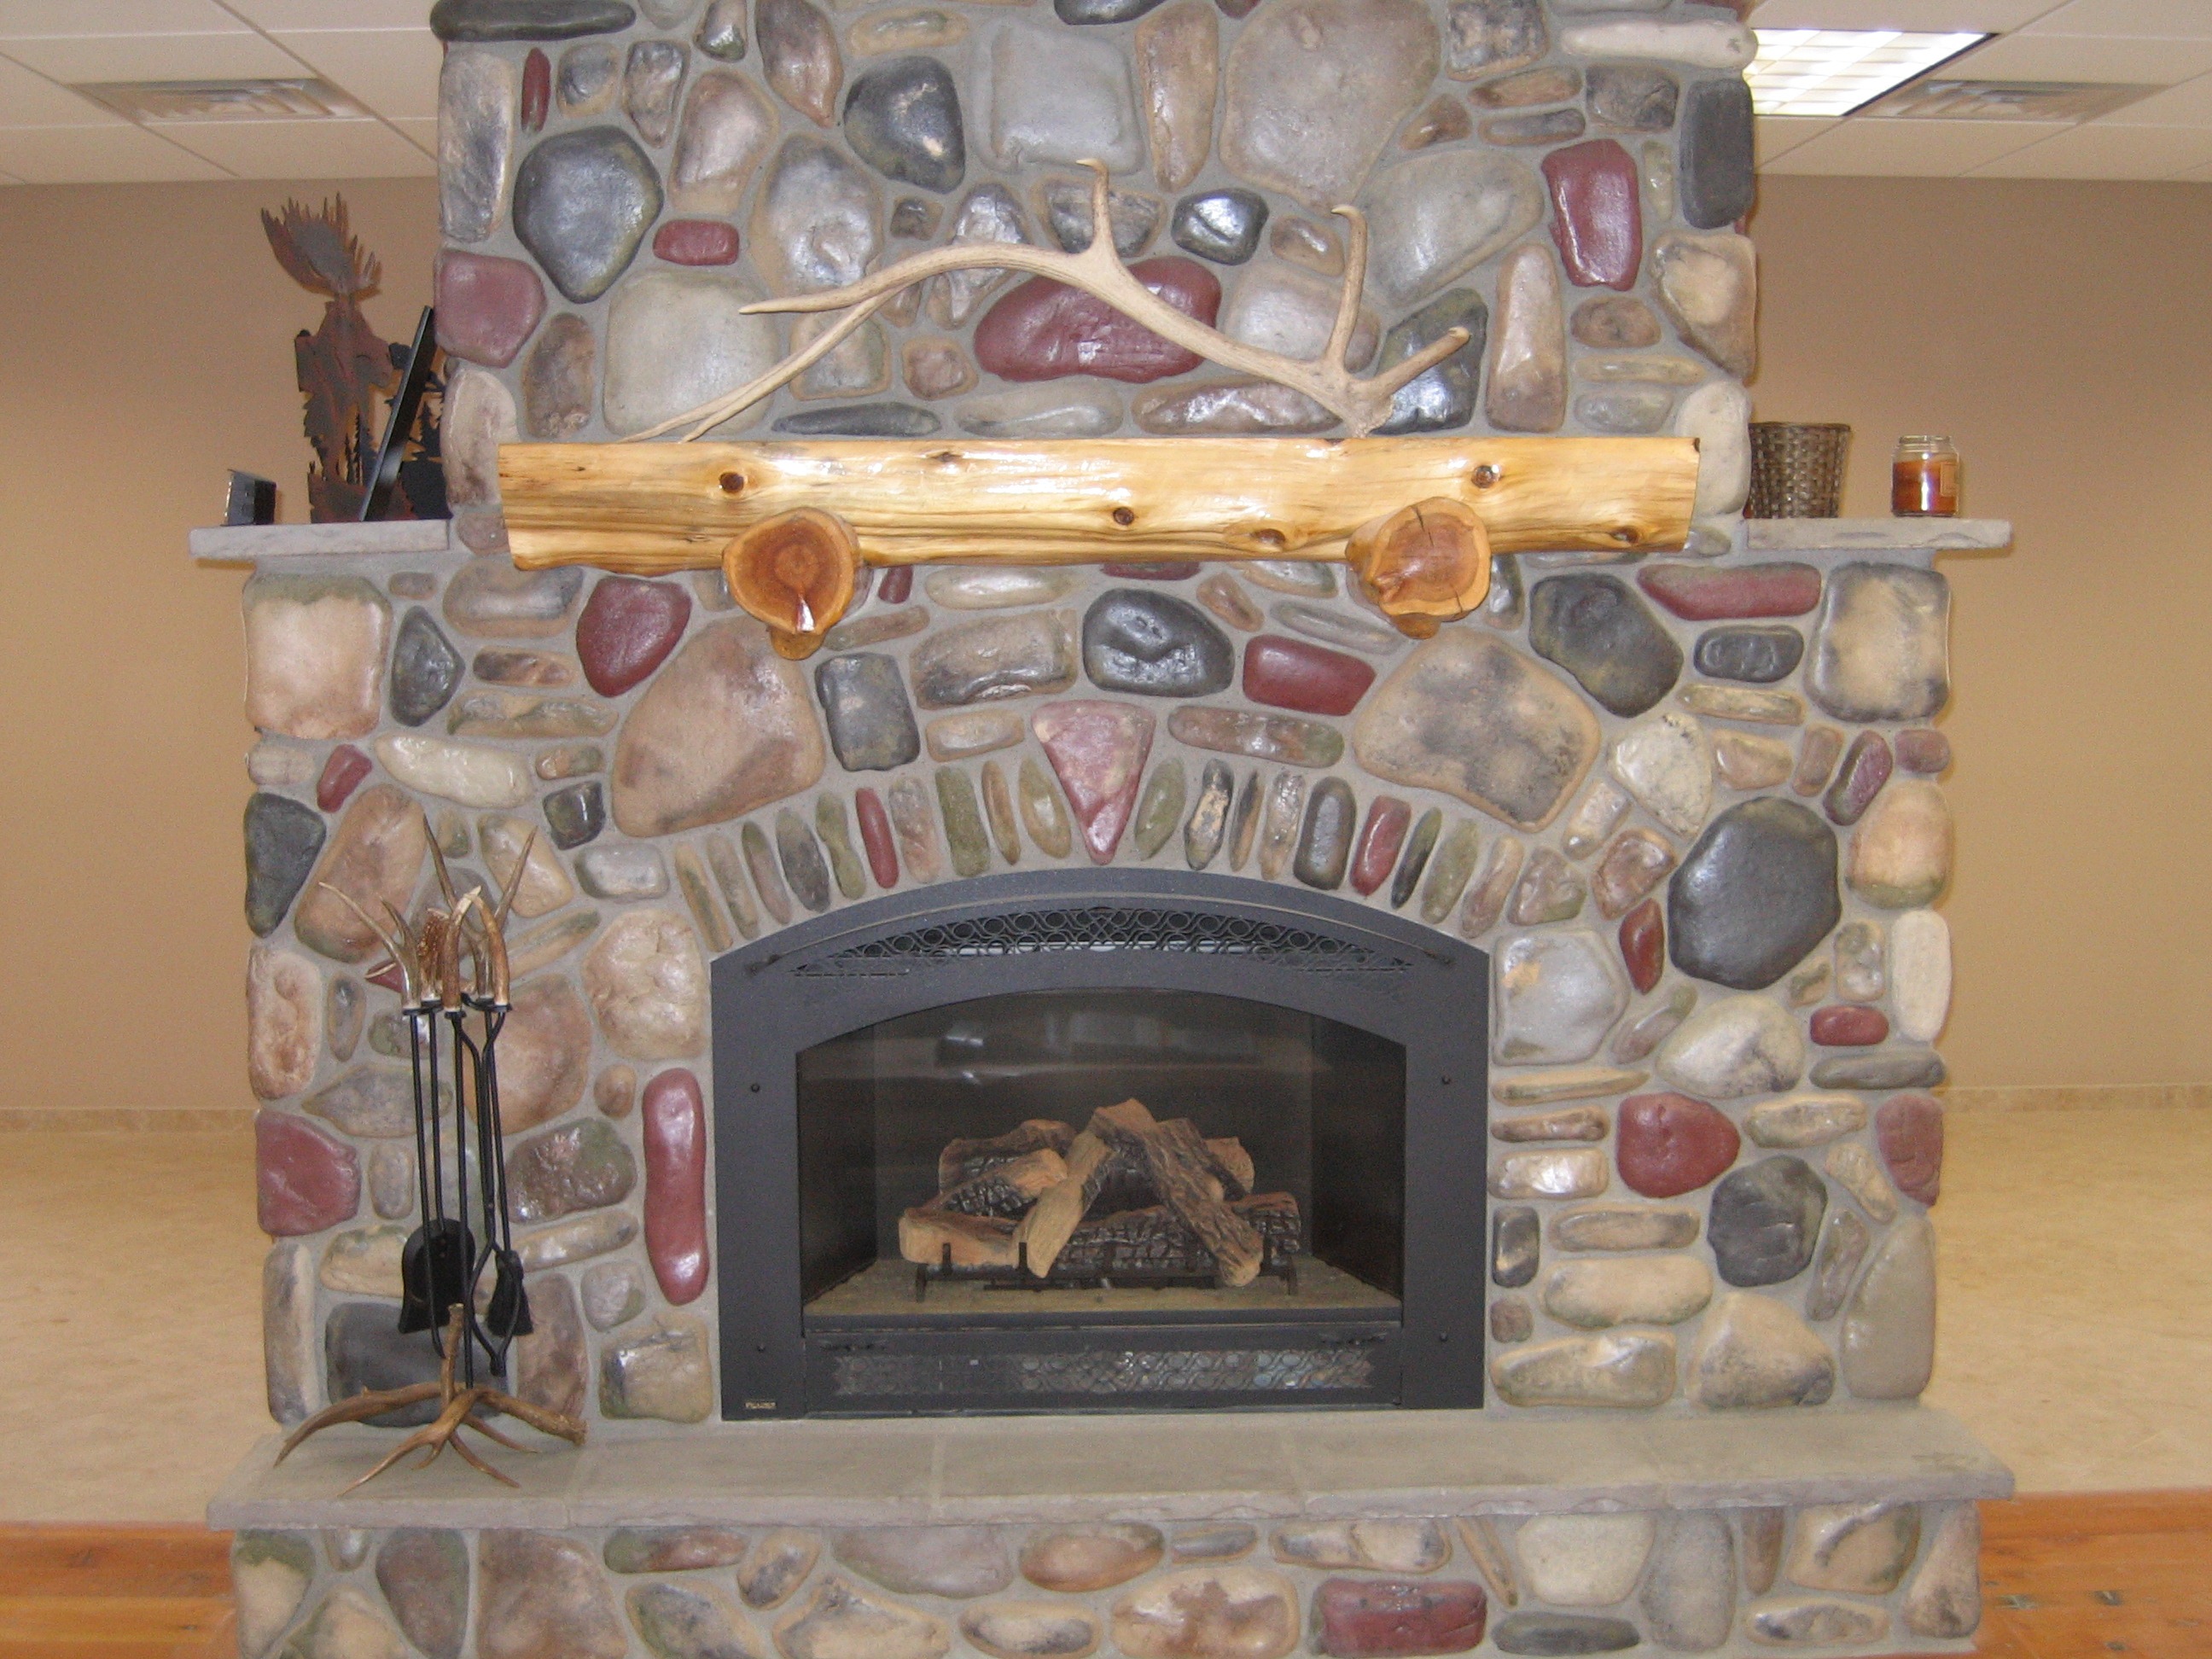 Rustic mantel shelf over a fireplace